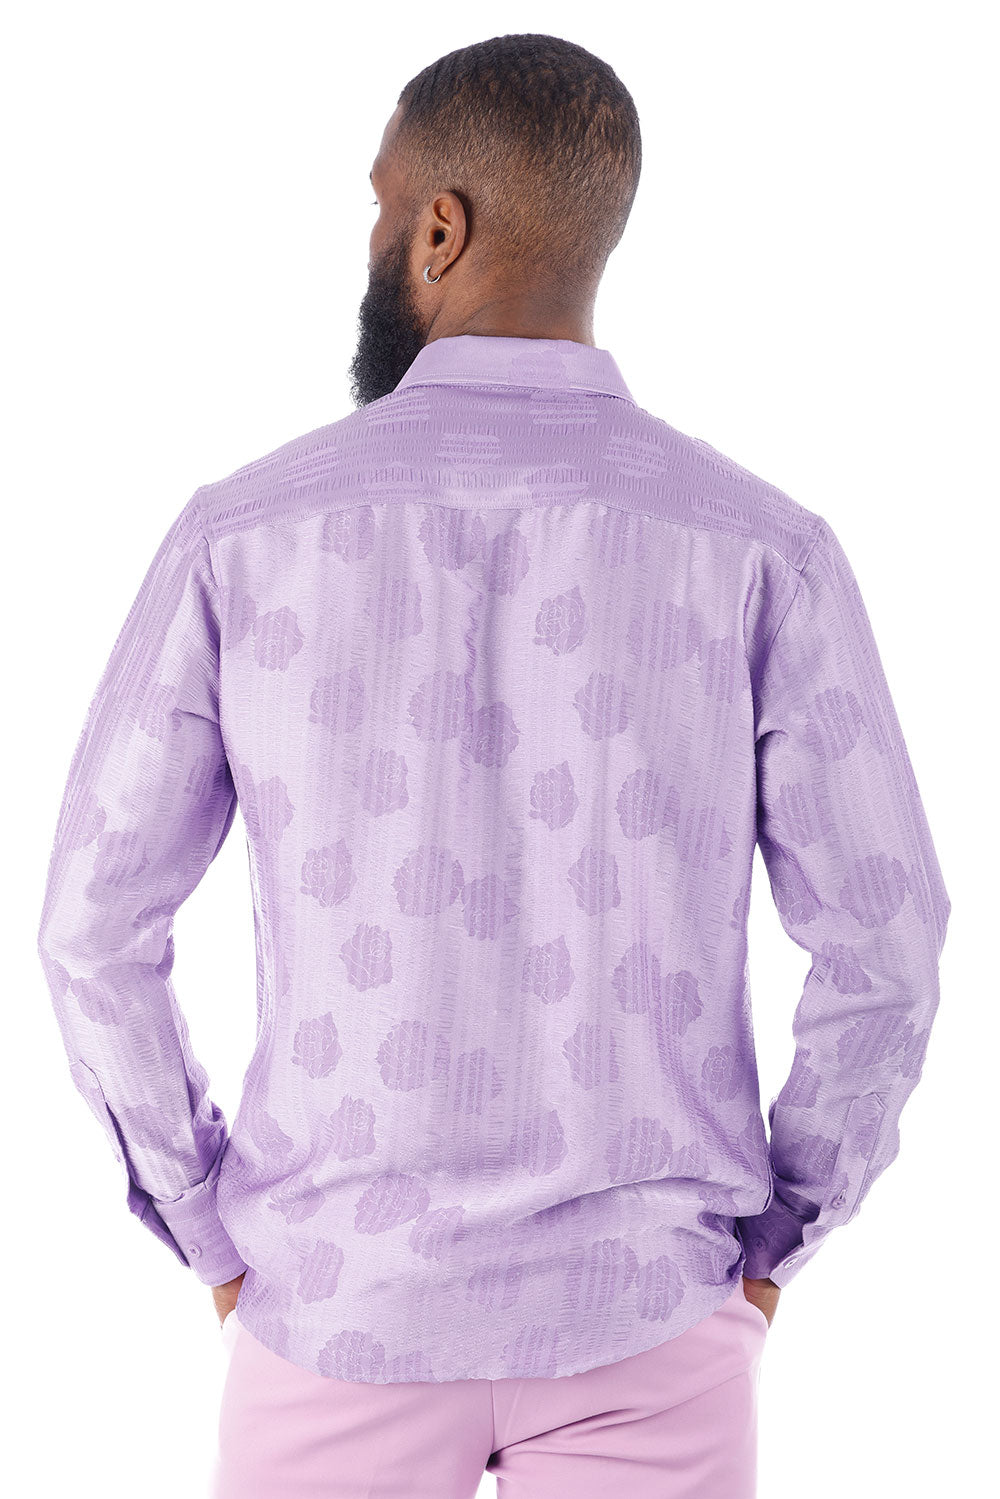 BARABAS Men's Floral Rose Button Down Long Sleeve Shirt 4B31 Lilac